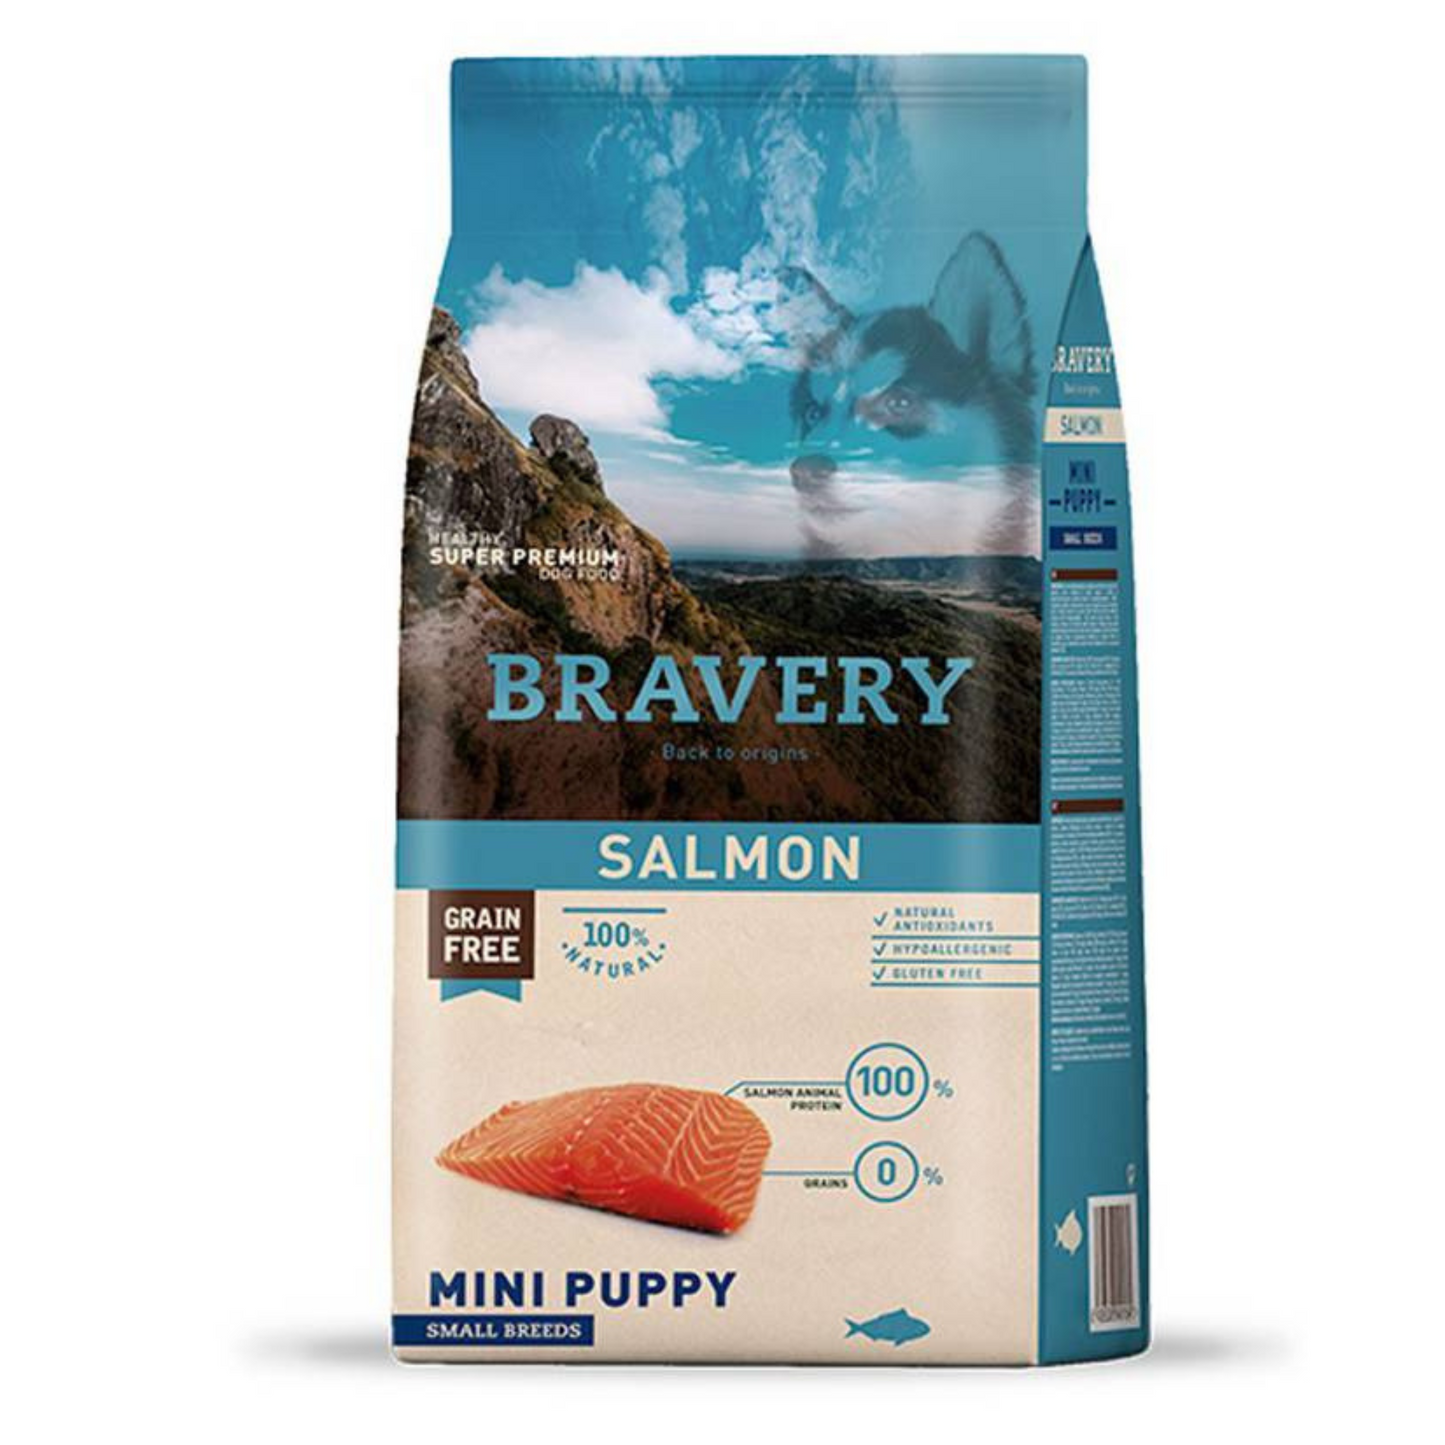 Bravery Salmon Mini Puppy